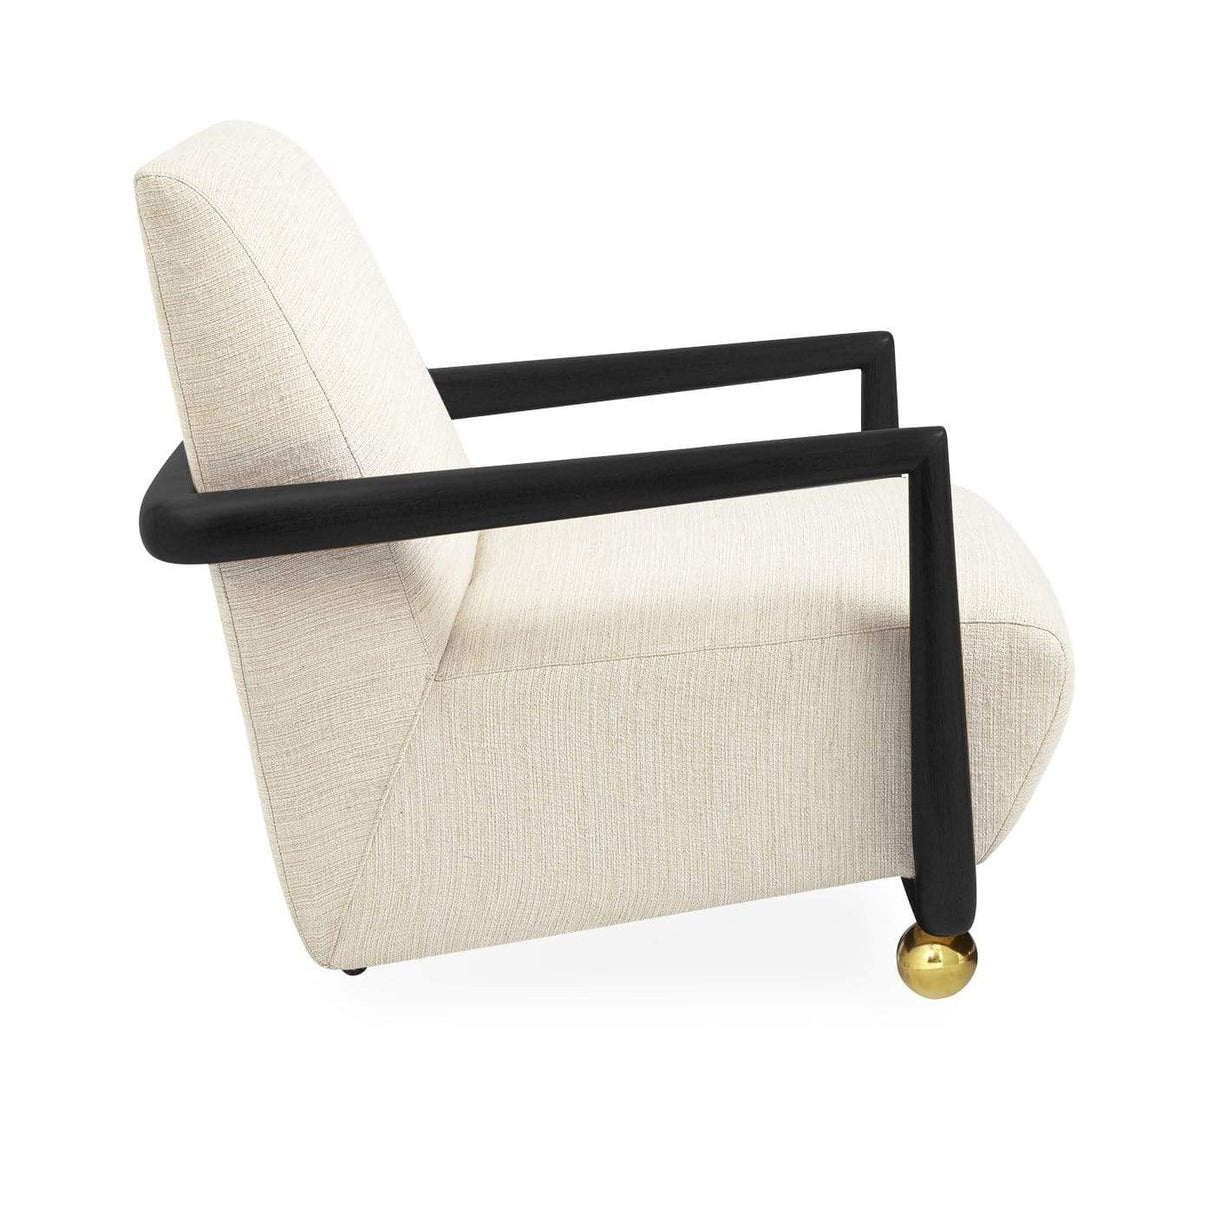 Jonathan Adler St. Germain Club Chair Furniture jonathan-adler-28570 00812205035080